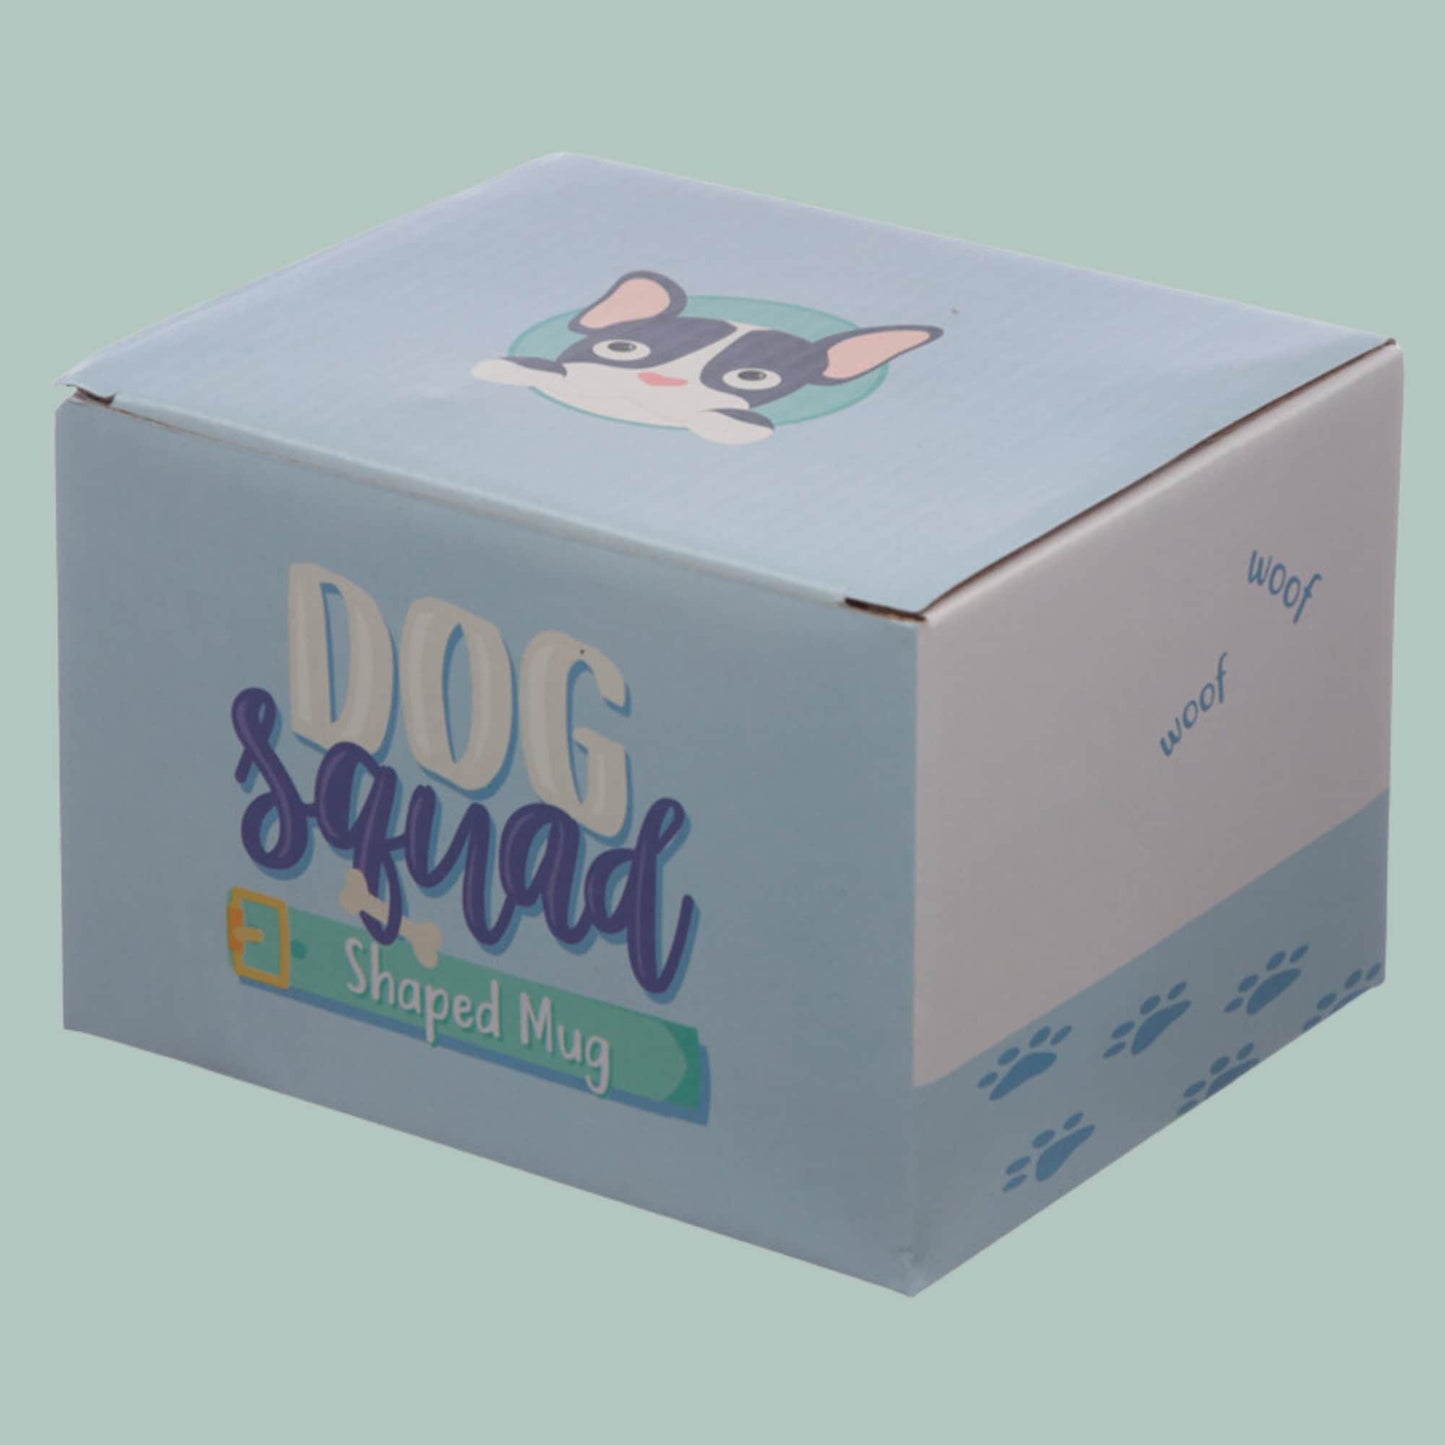 French Bulldog Shaped Mug Ceramic dog Shaped Mug Animal Mug Dog Lover Gift Mug Dog Mum Present Fun Dog Dad Coffee Cup Great Cute Pet Gift